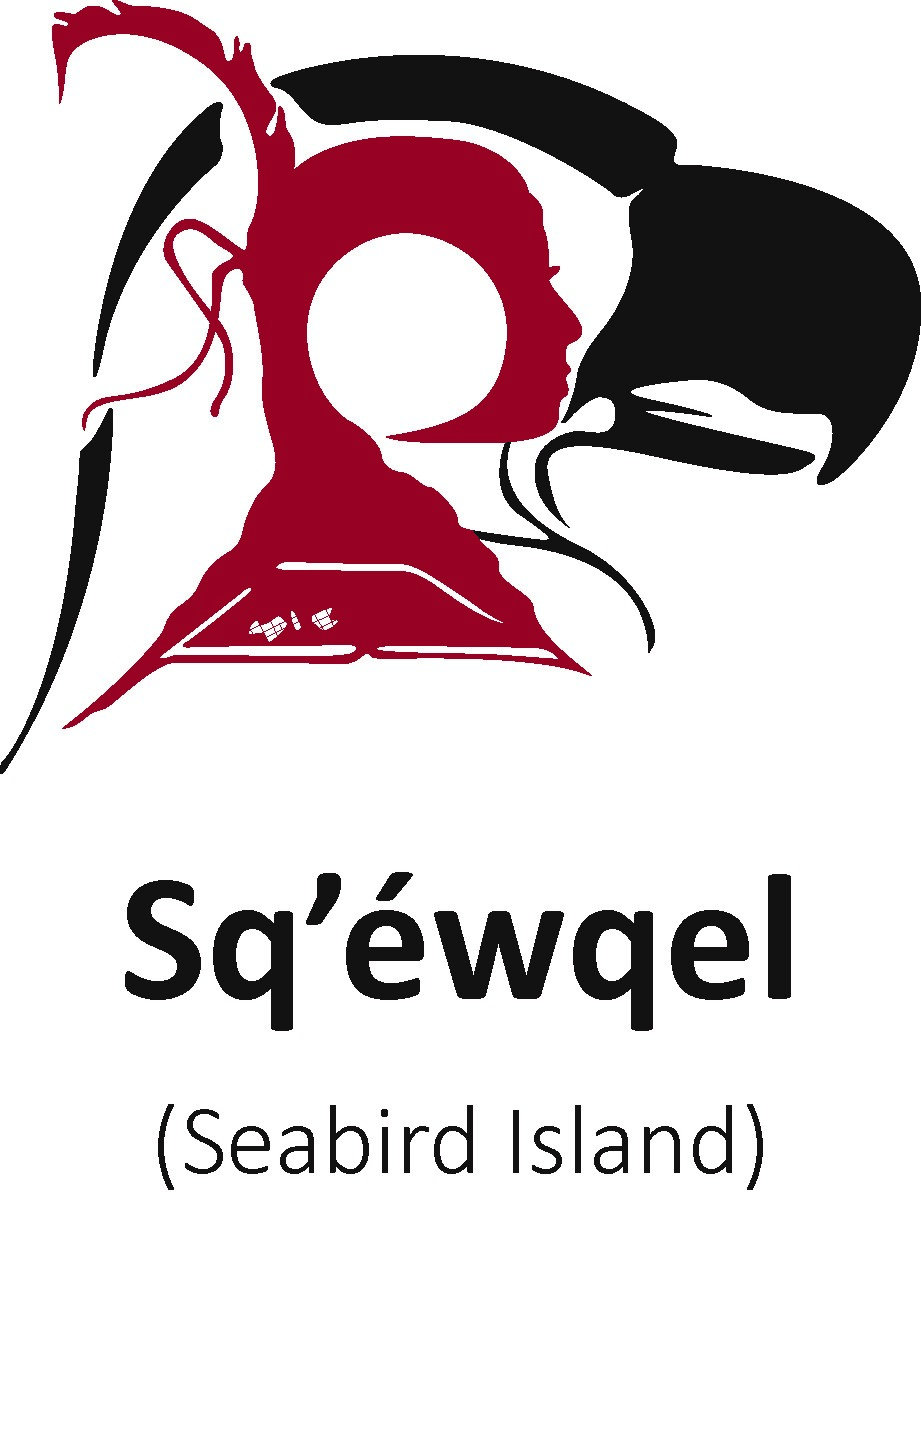 Seabird Island logo